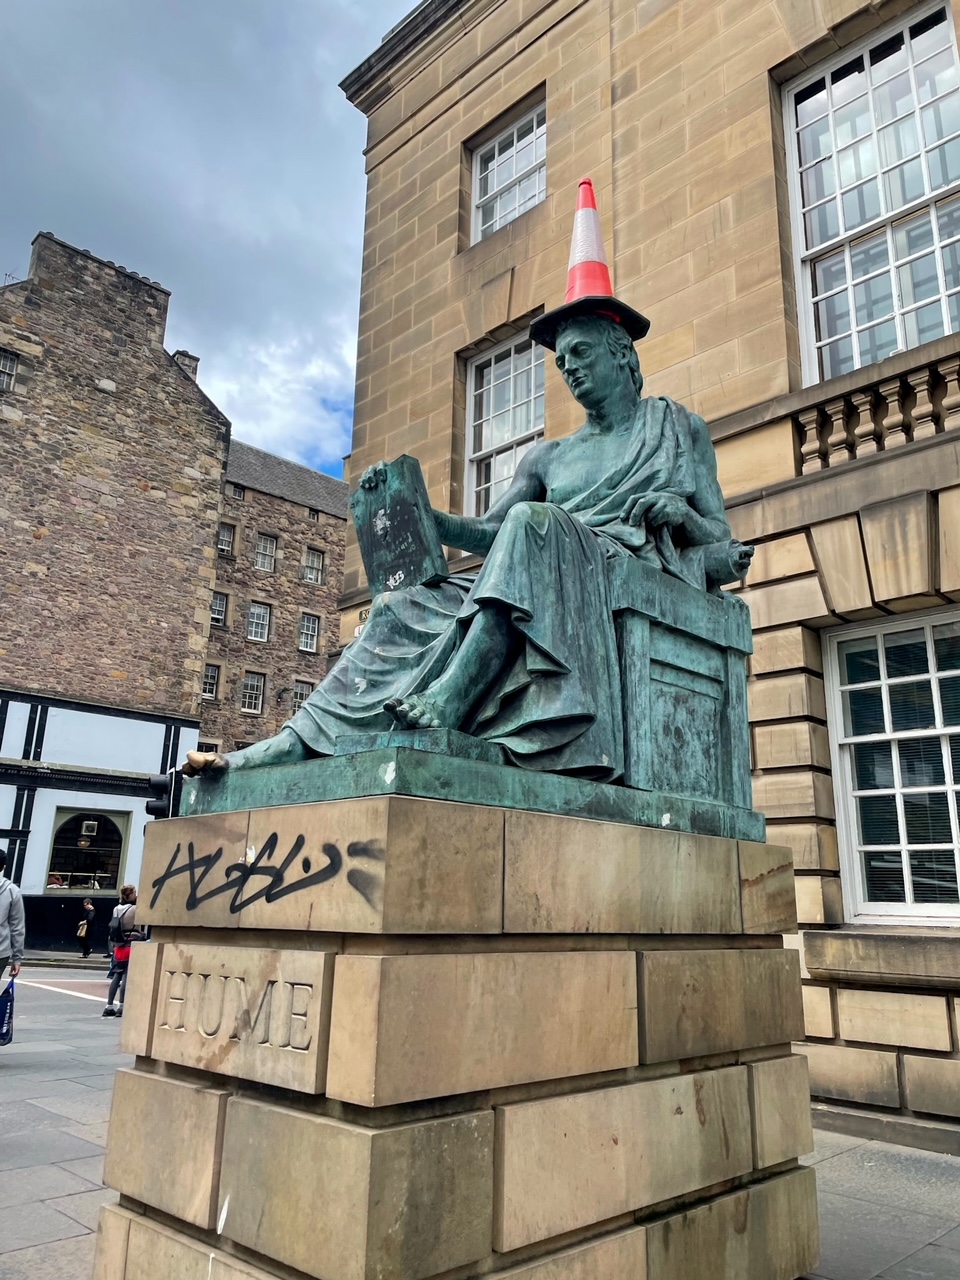 David Hume's statue in Old Town Edinburgh